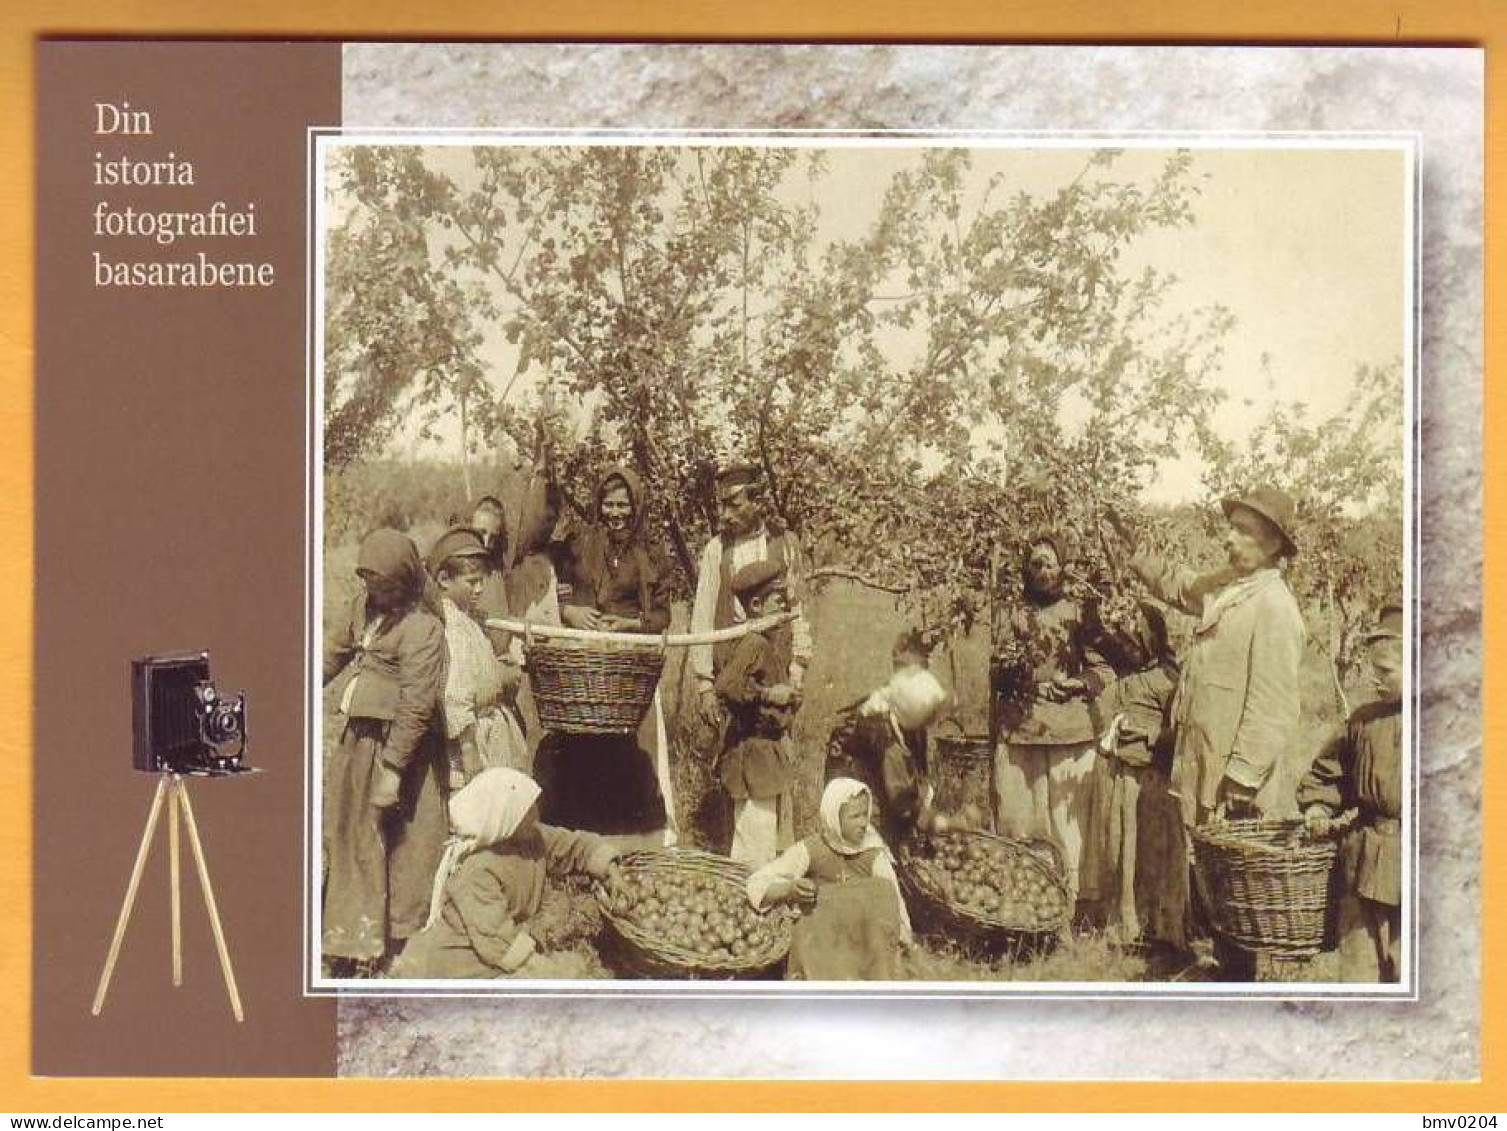 2014 Moldova  Postcard. Fruit Collection. The Village Of Speia. Basarabia. Osterman. The Museum. Apples. - Moldova